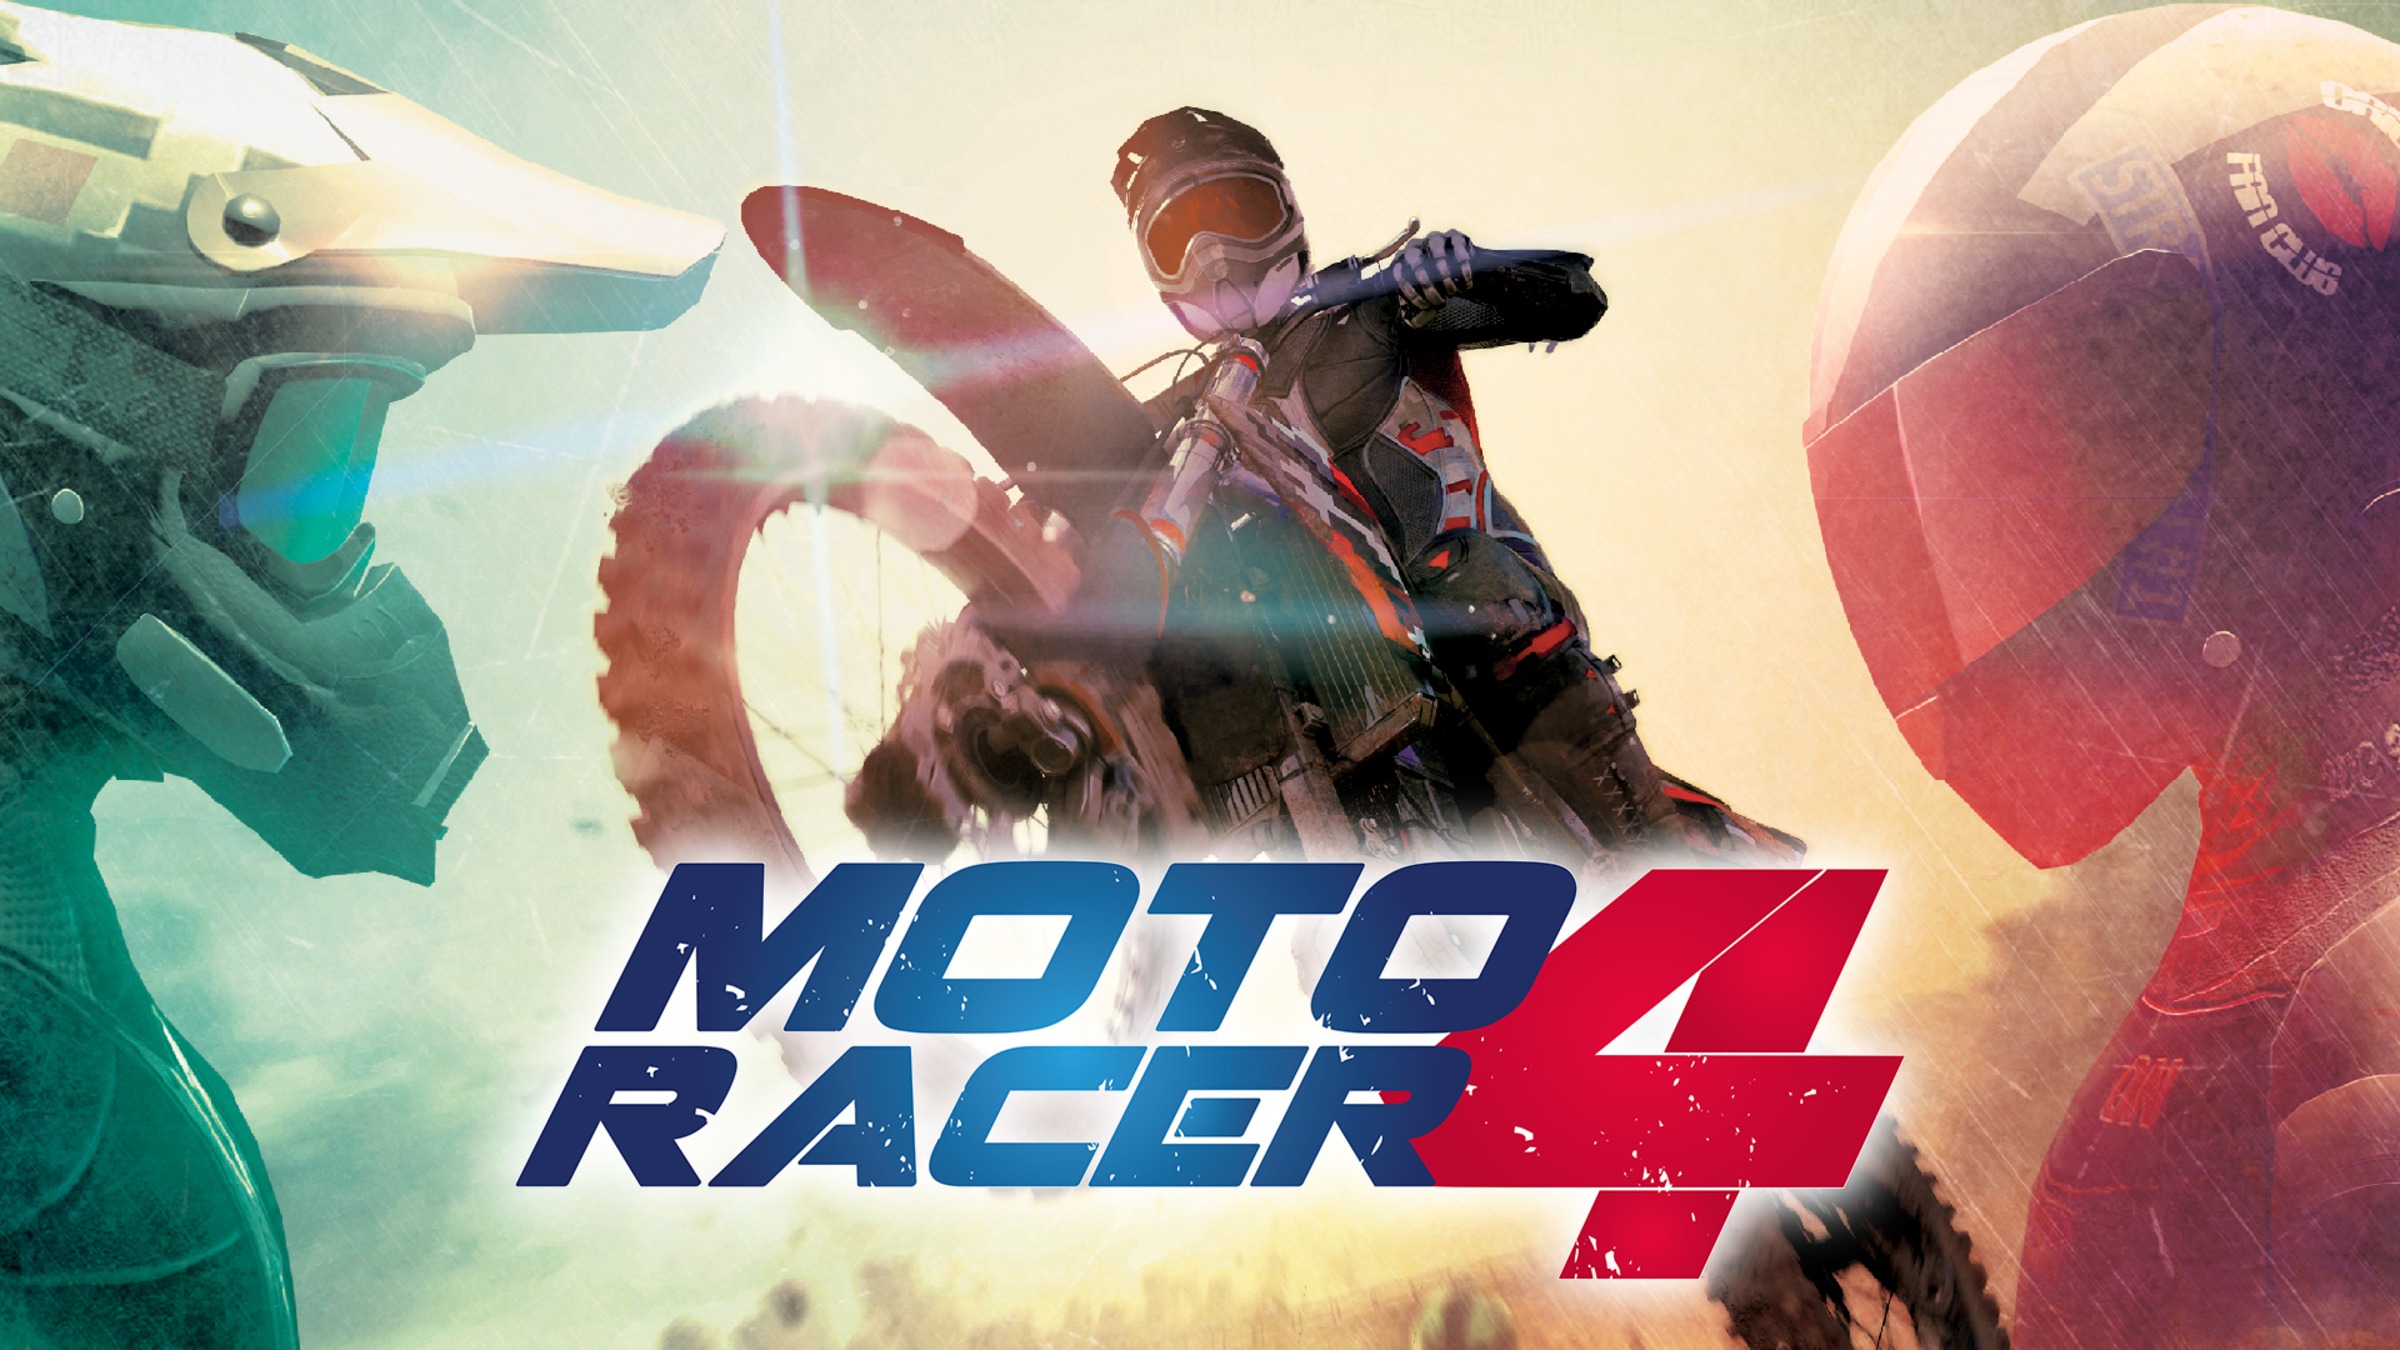 Moto Racer Simulator GT Games for Nintendo Switch - Nintendo Official Site